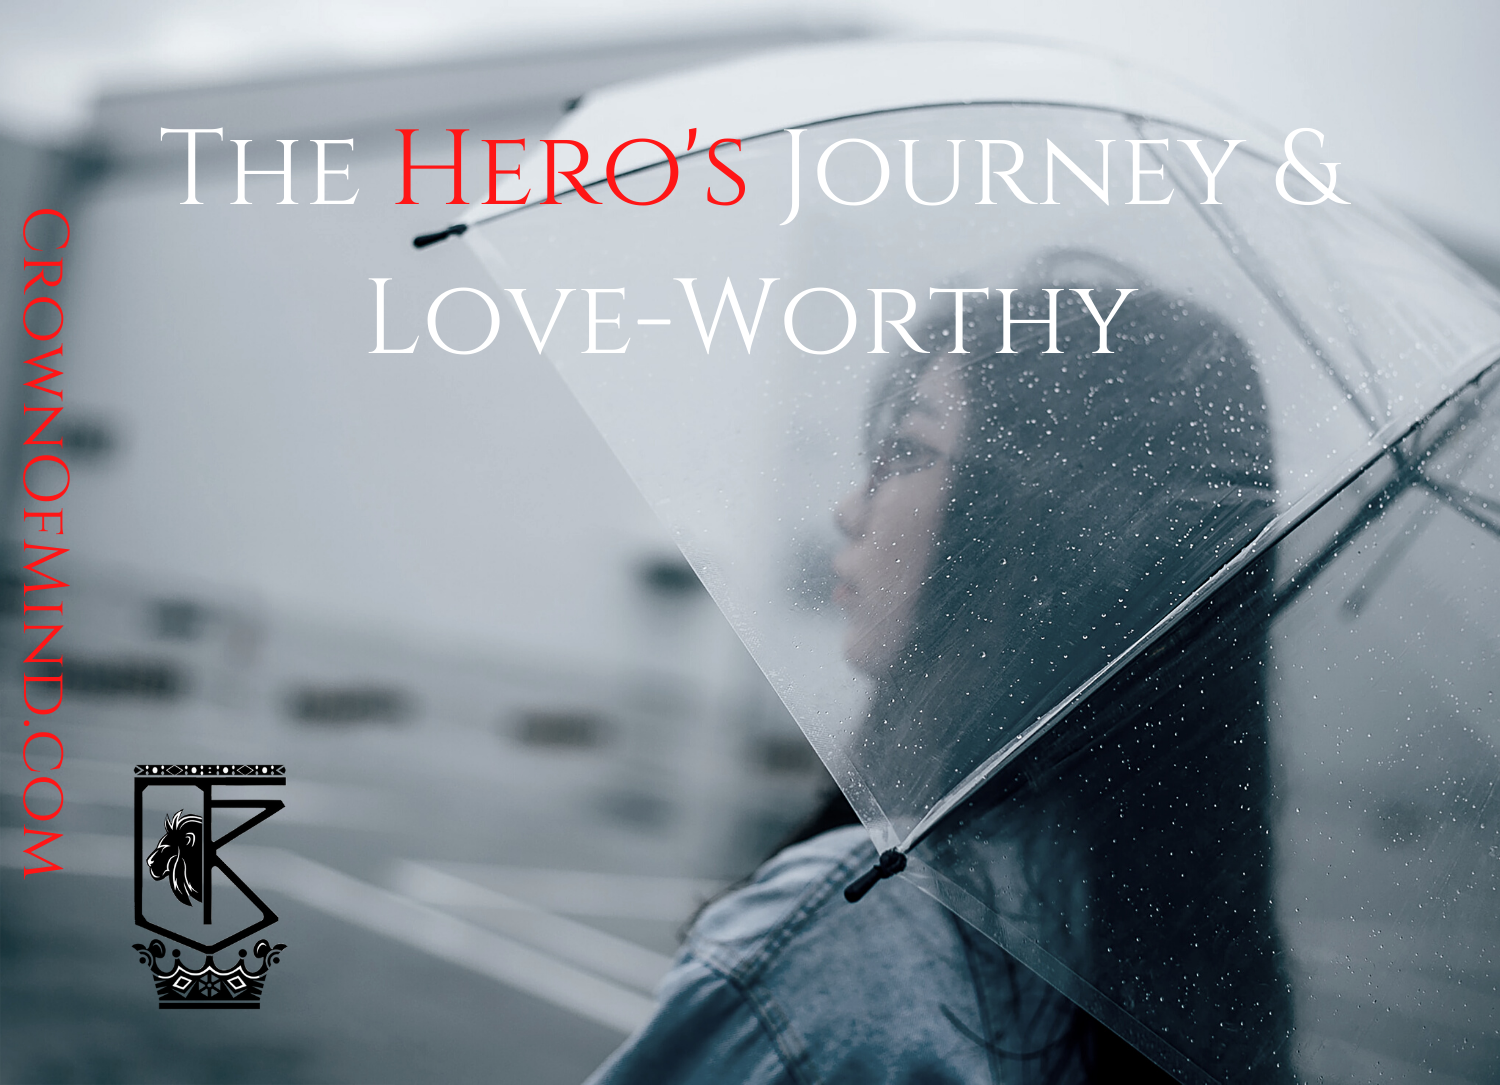 The Hero’s Journey & Love-Worthy